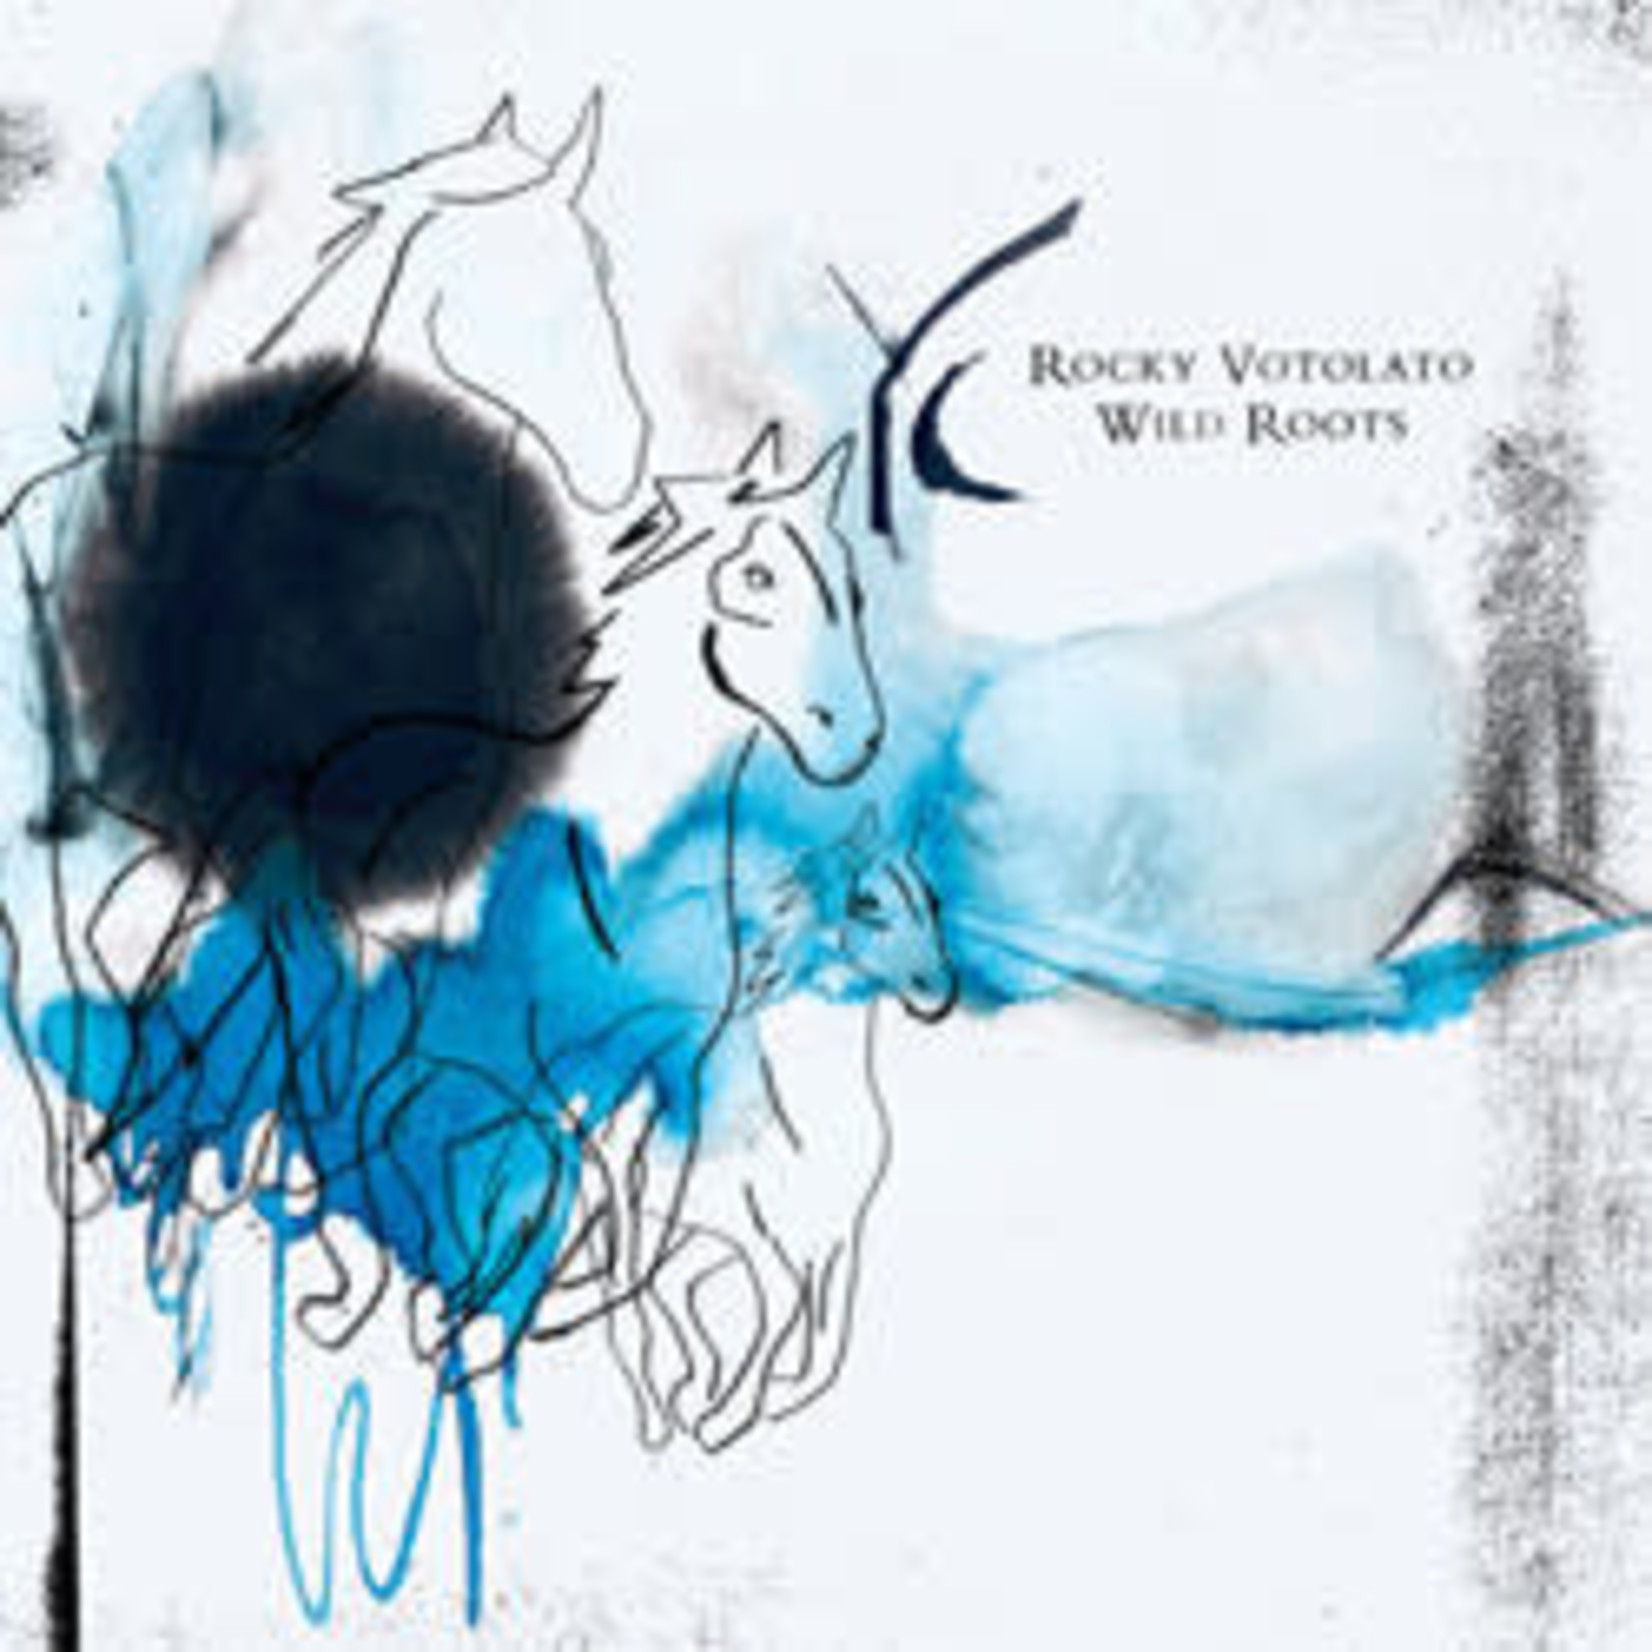 Spartan Rocky Votolato - Wild Roots (LP) [White]